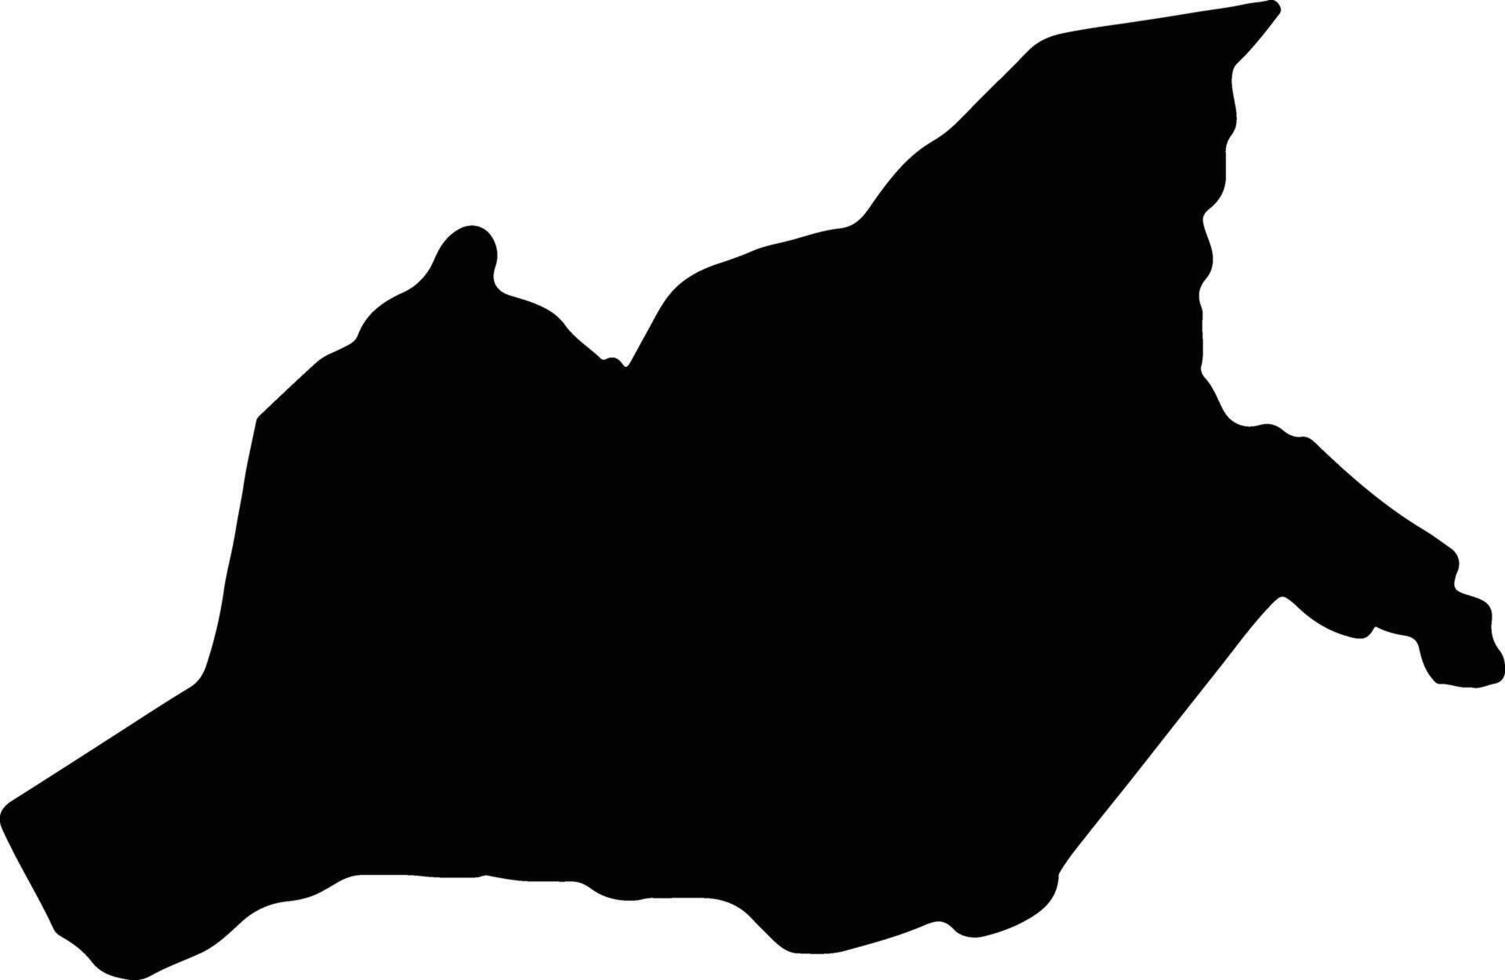 caaguazu paraguay silhouette carta geografica vettore